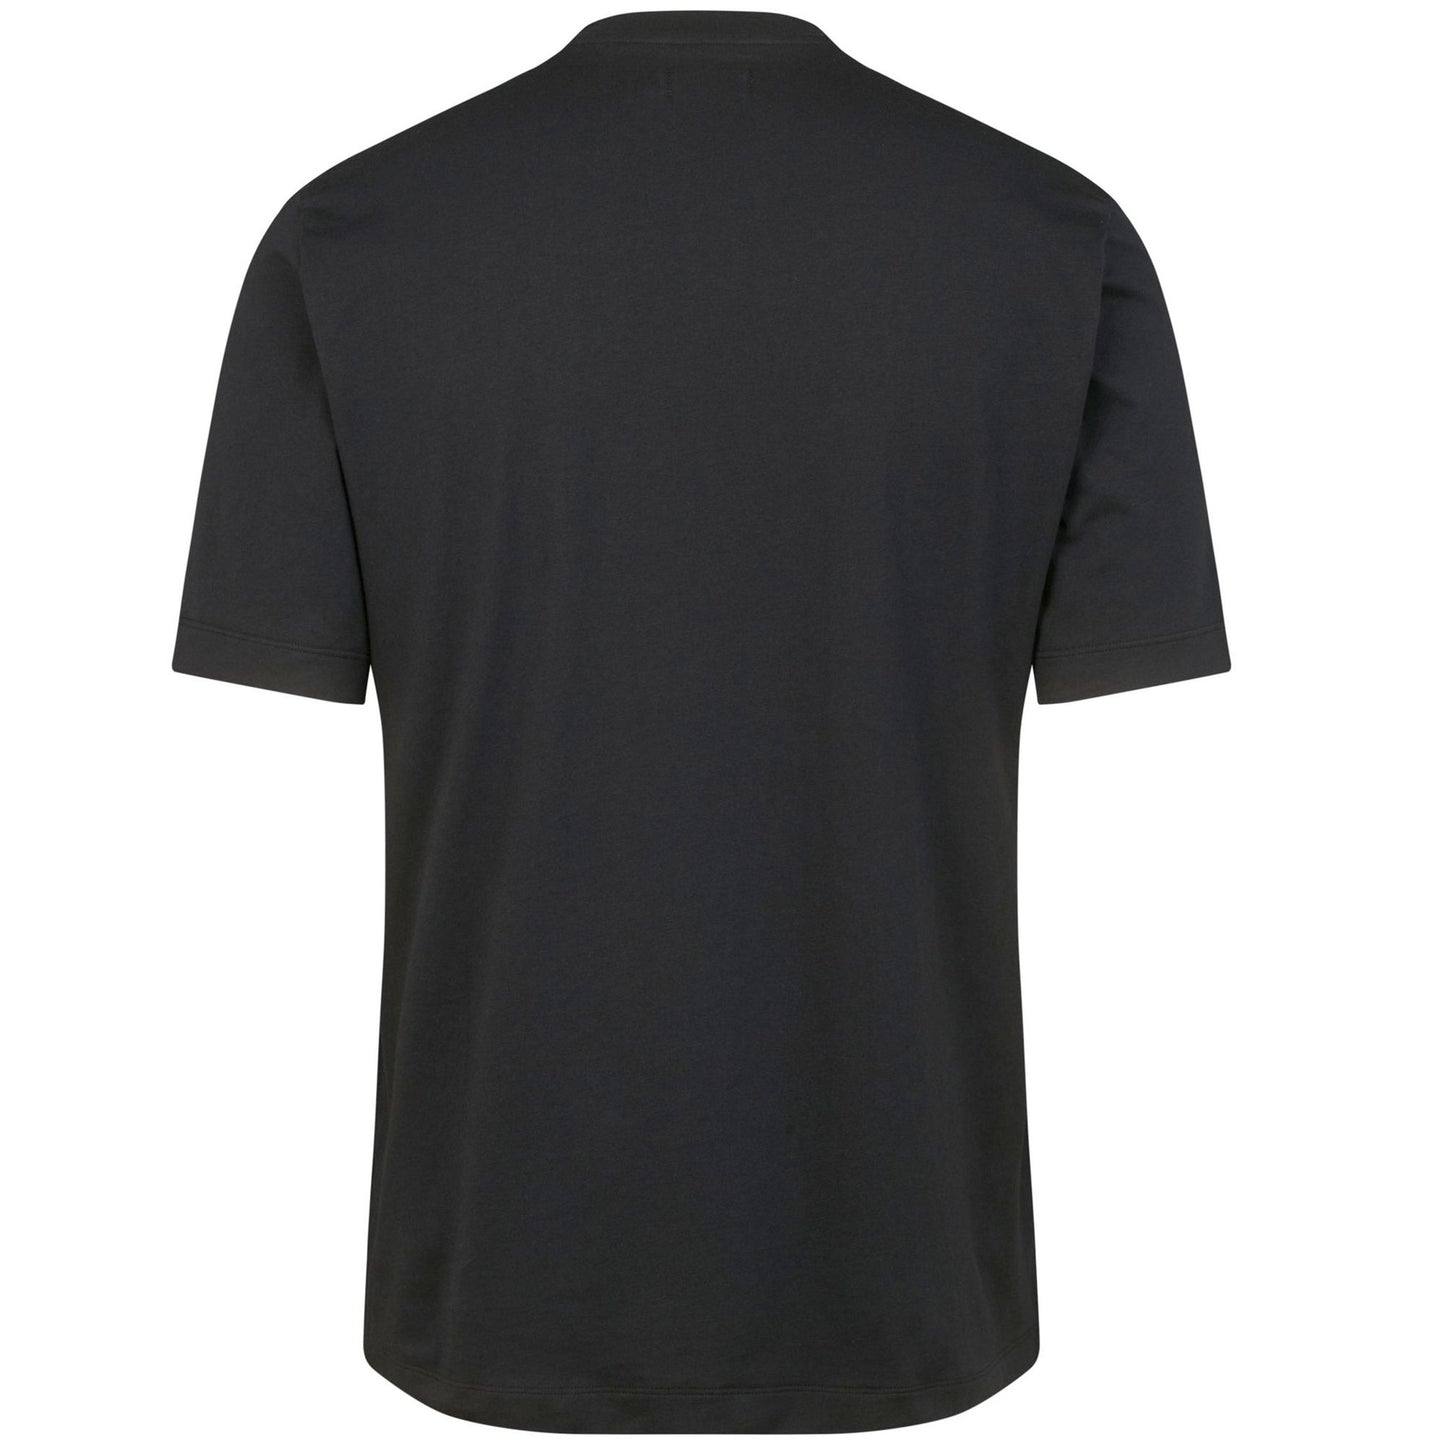 Rapha Men's Logo T-Shirt, Black/White